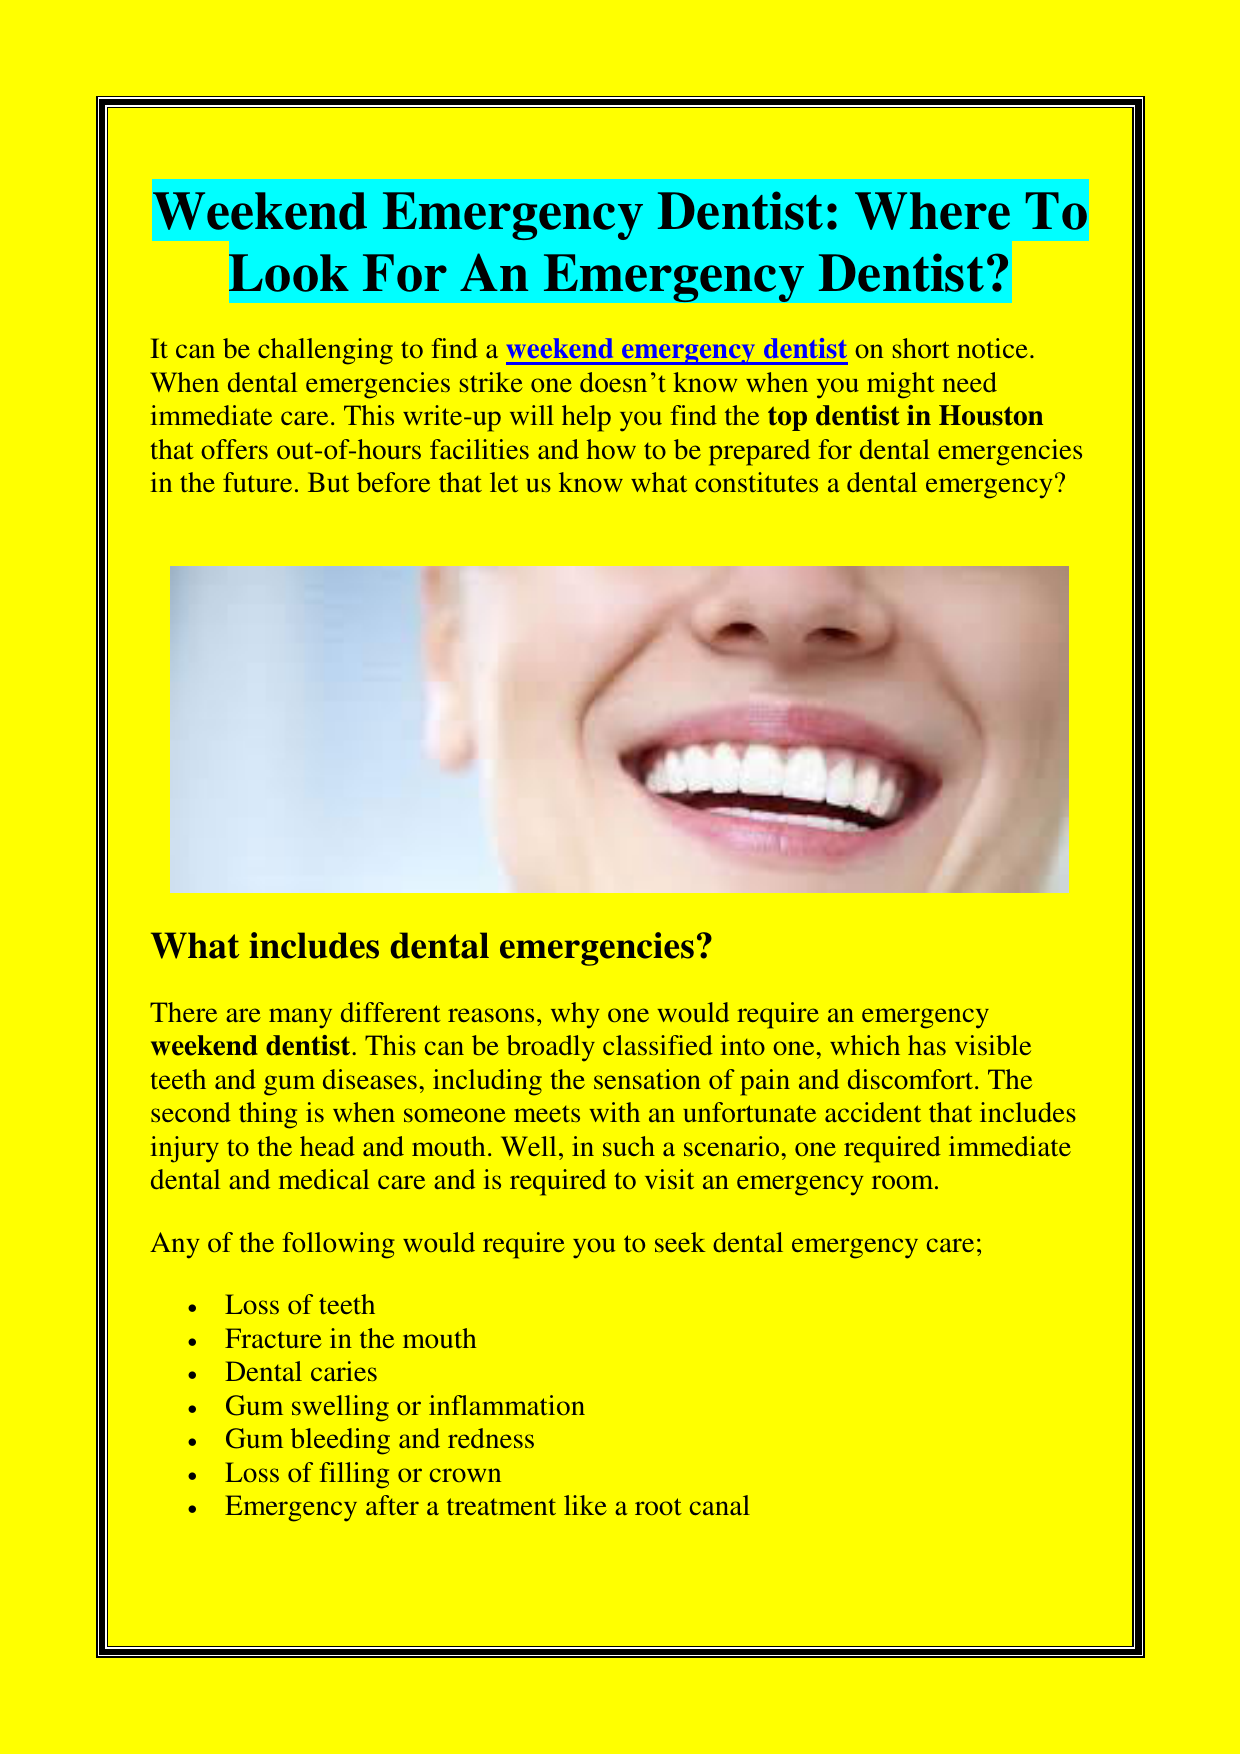 Weekend Emergency Dentist Where To Look For An Emergency Dentist